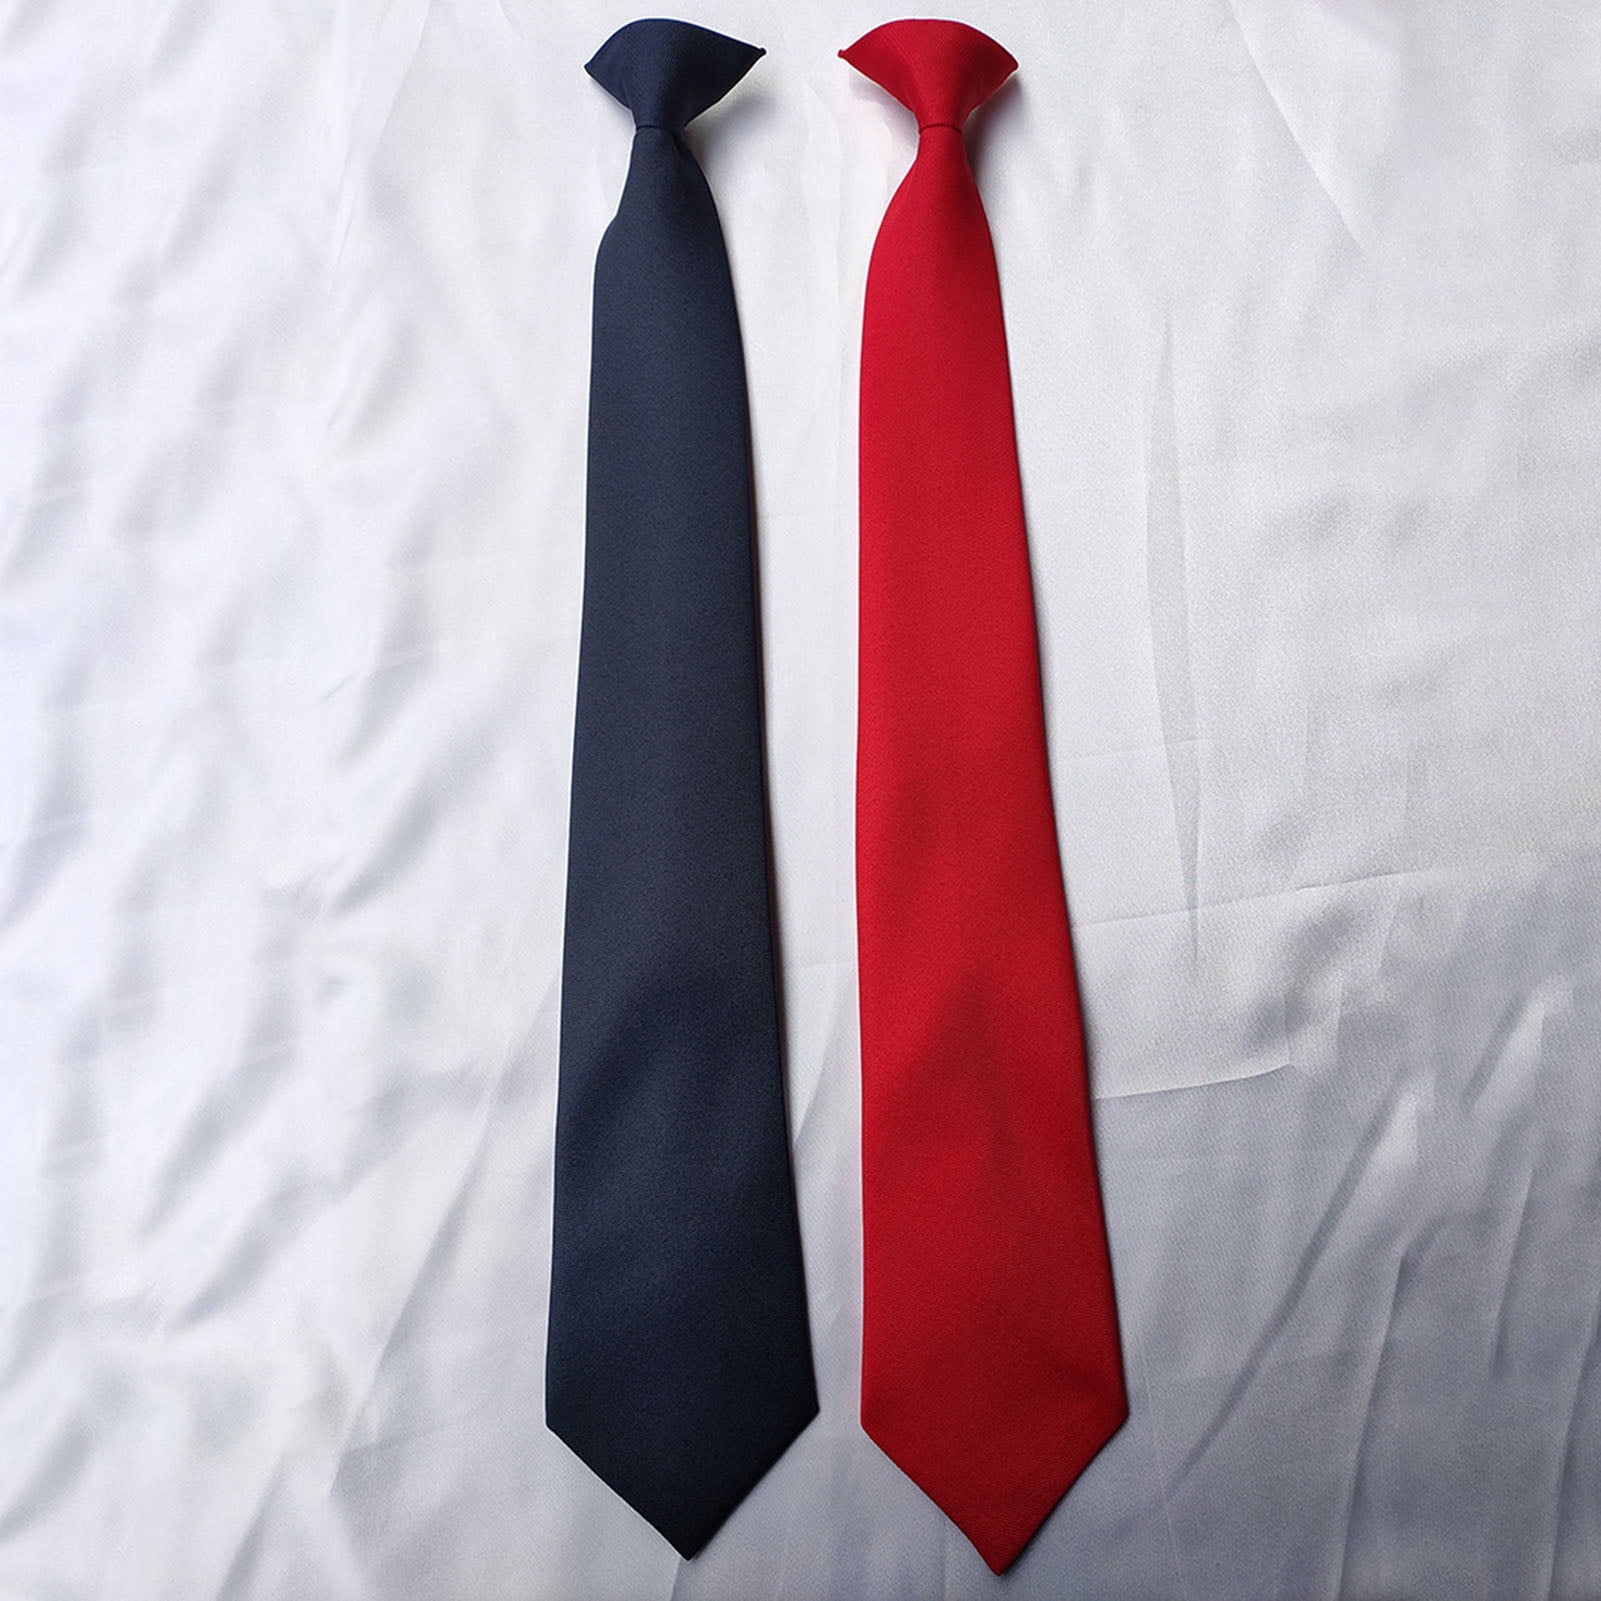 Haysandy 6 Pcs Clip on Ties for Men Solid Color Men's Tie Clip on Necktie 20 Inches Pretied Ties for Office School Uniforms